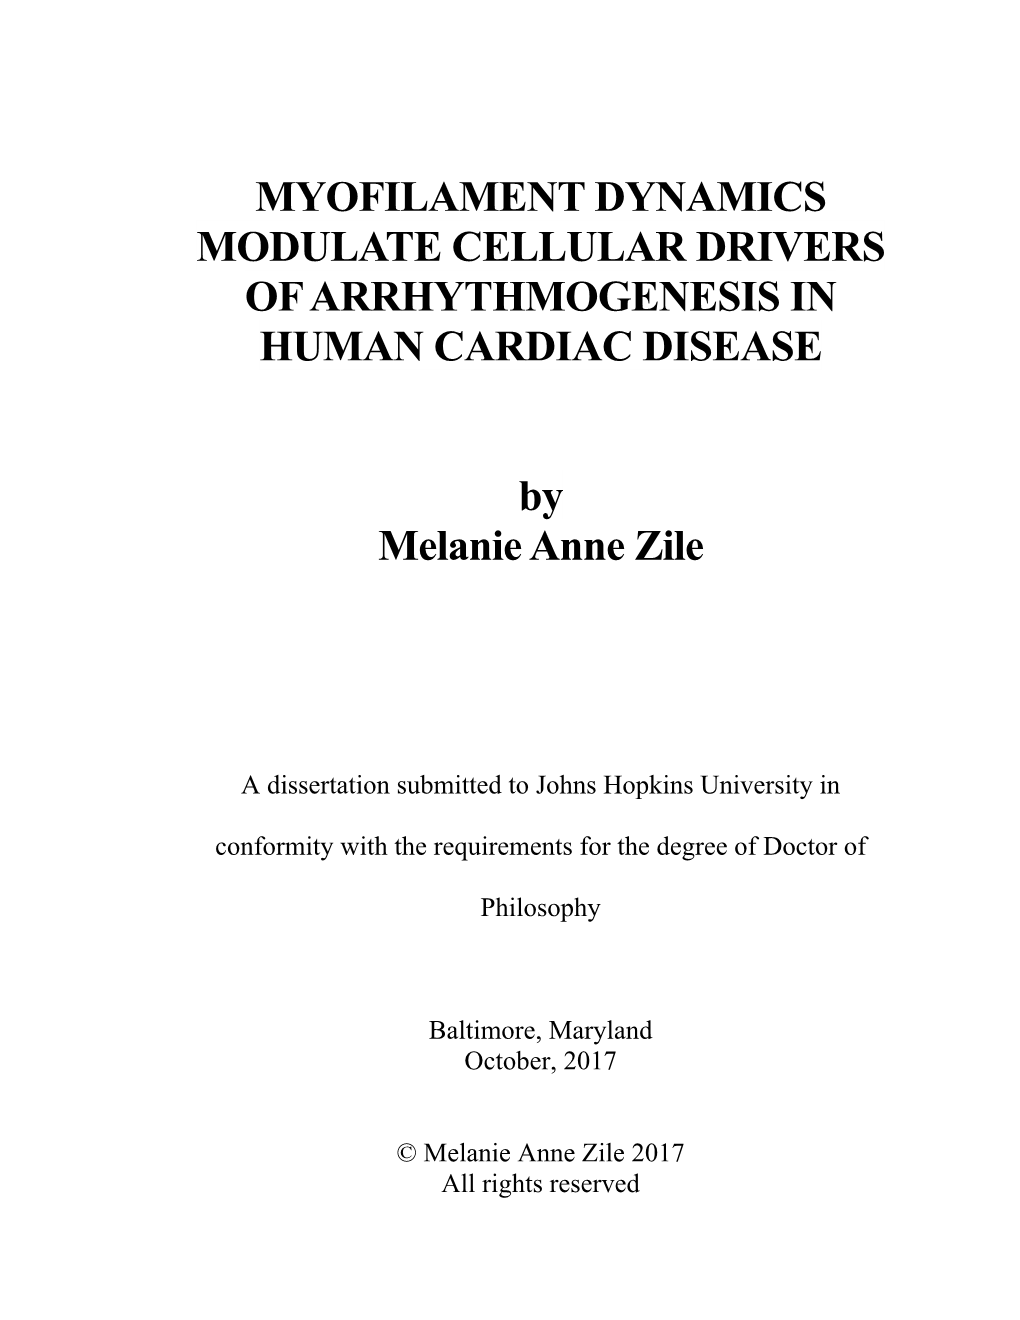 Myofilament Dynamics Modulate Cellular Drivers of Arrhythmogenesis in Human Cardiac Disease